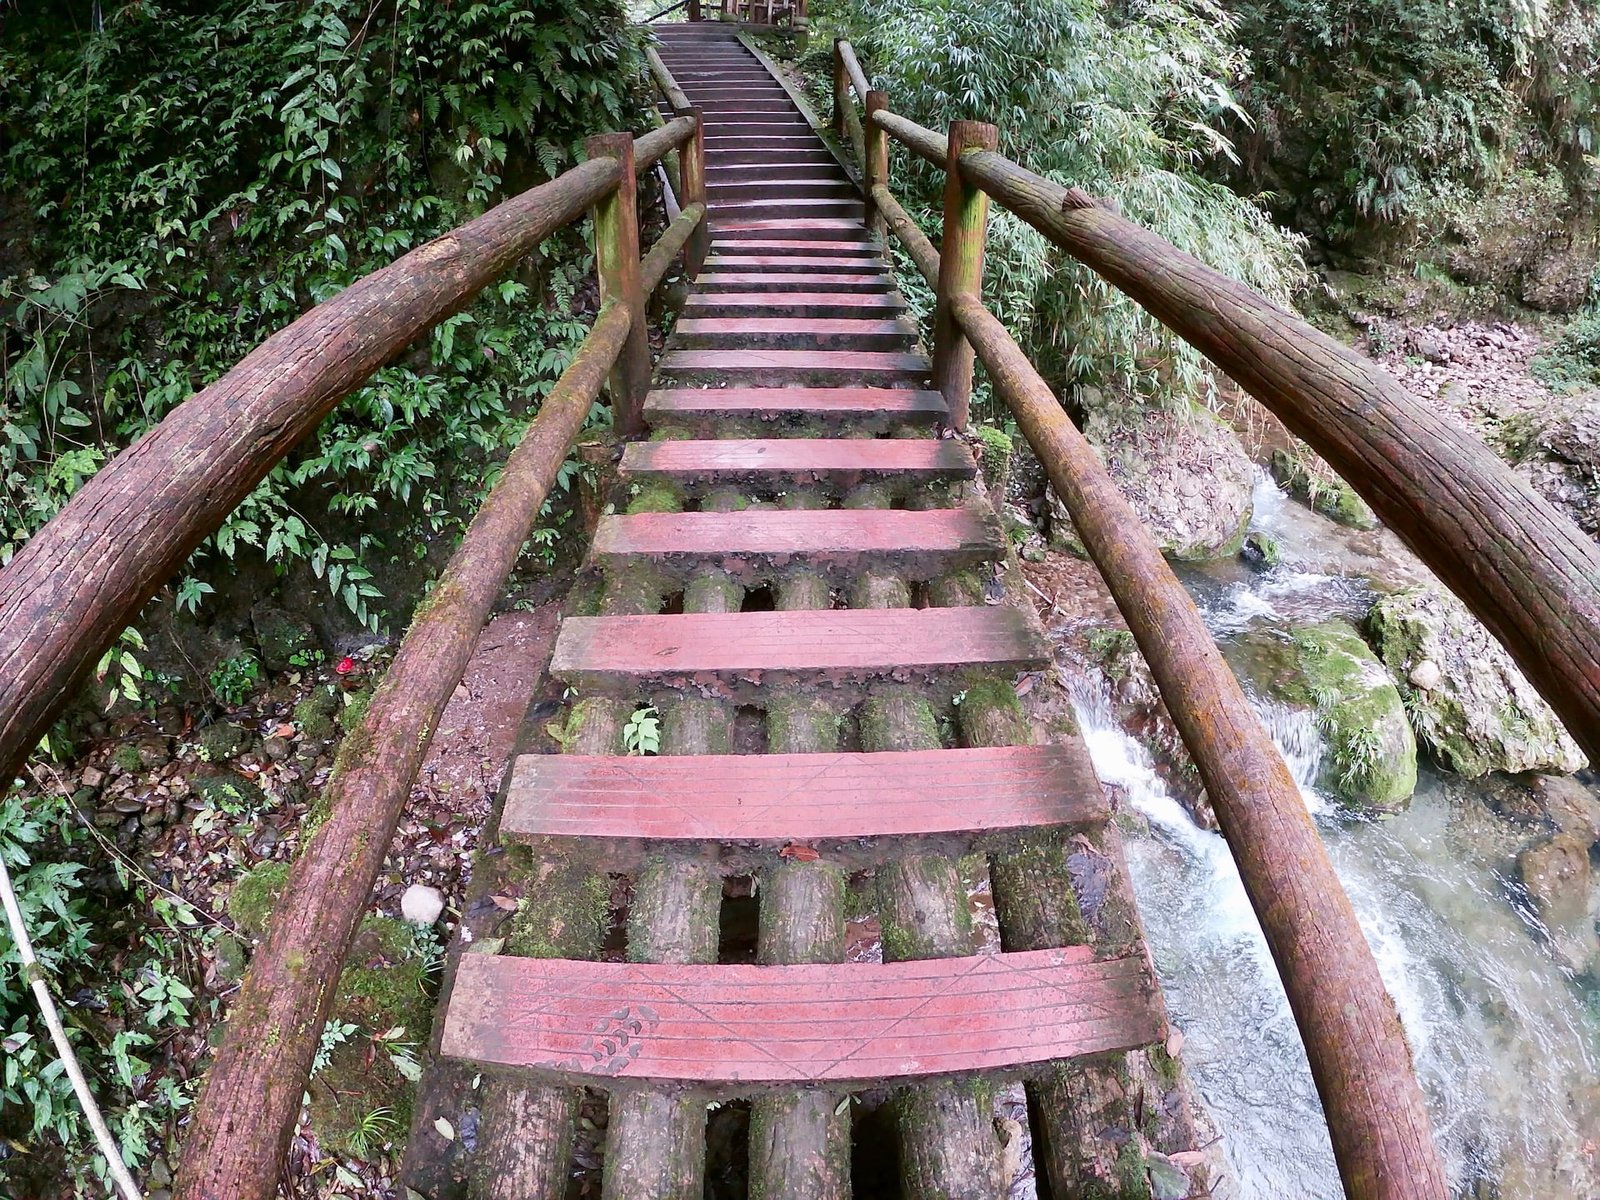 Log bridges over running water is common at Mounta Qingcheng (back mountain)